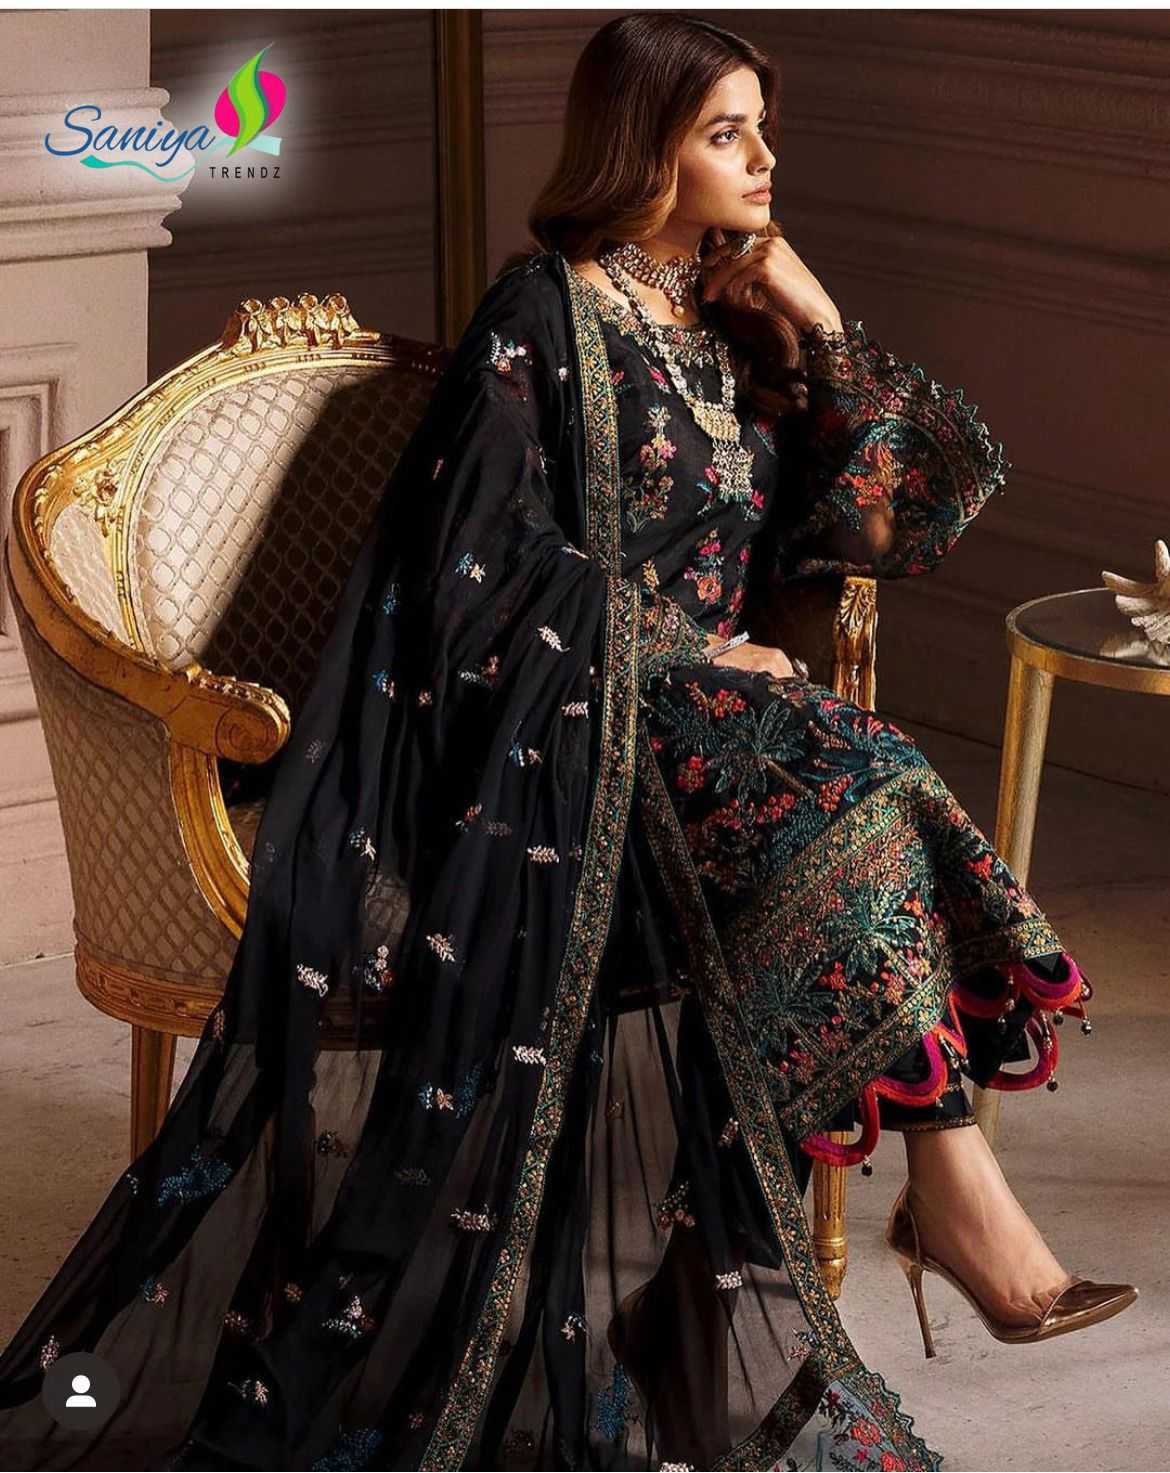 Saniya trendz 7014 pakistani designer unstitch salwar kameez with naznin dupatta